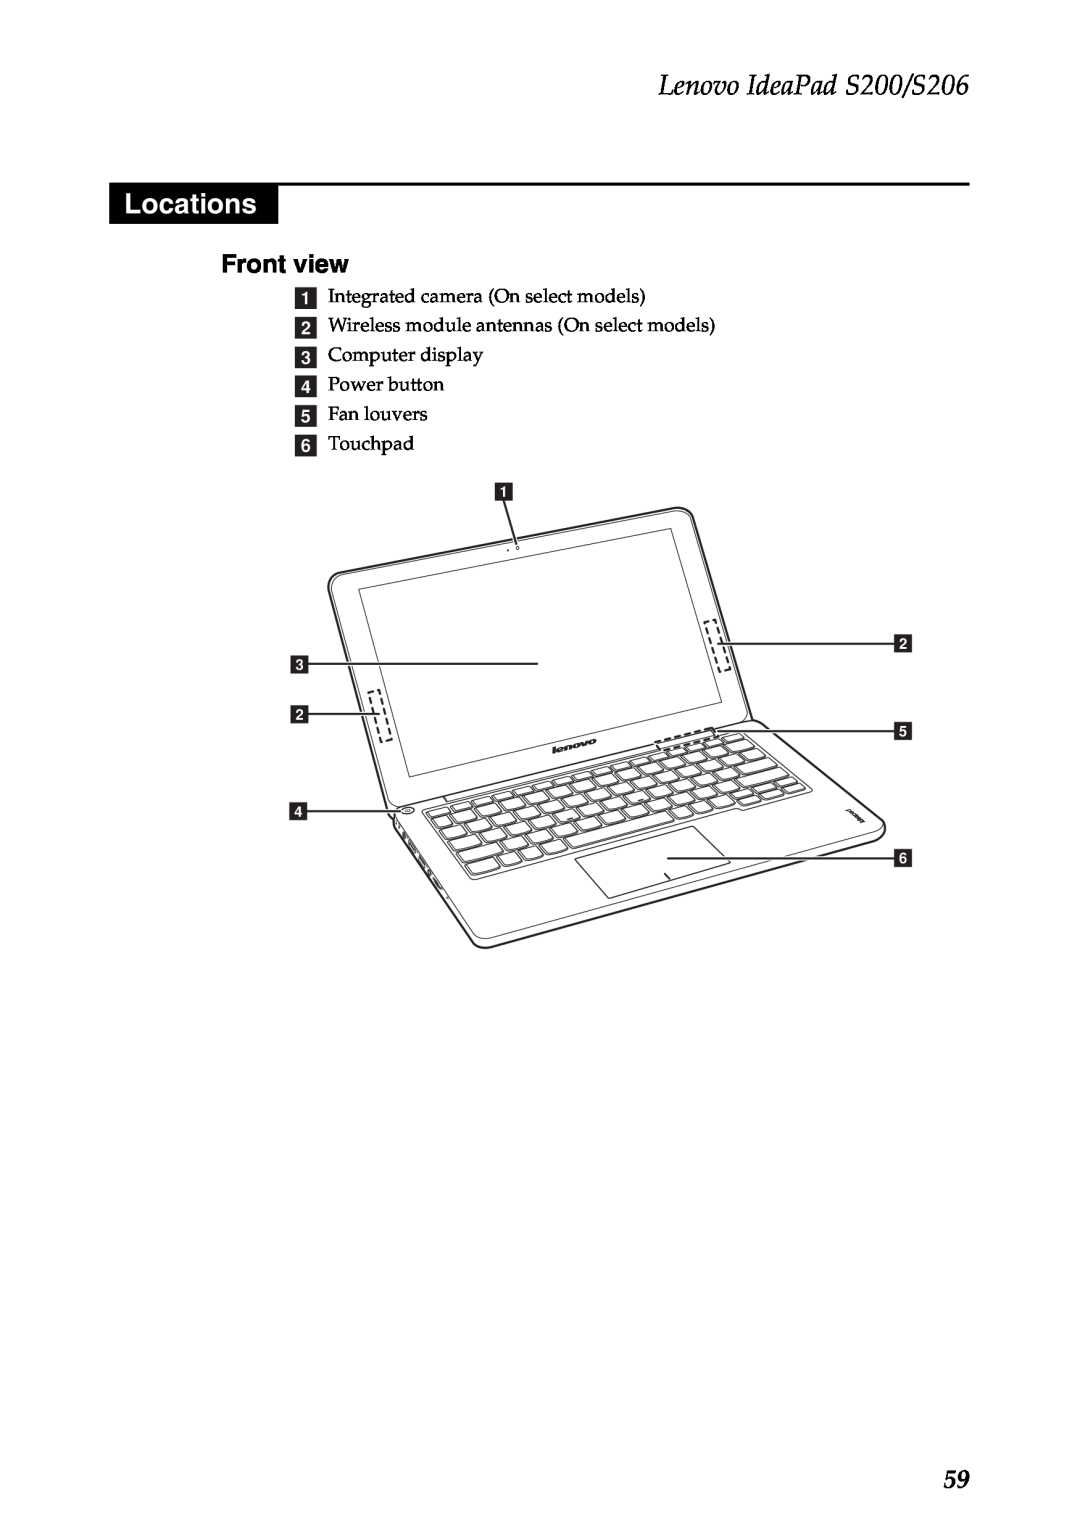 Lenovo manual Locations, Front view, Lenovo IdeaPad S200/S206, a b c b e d f 